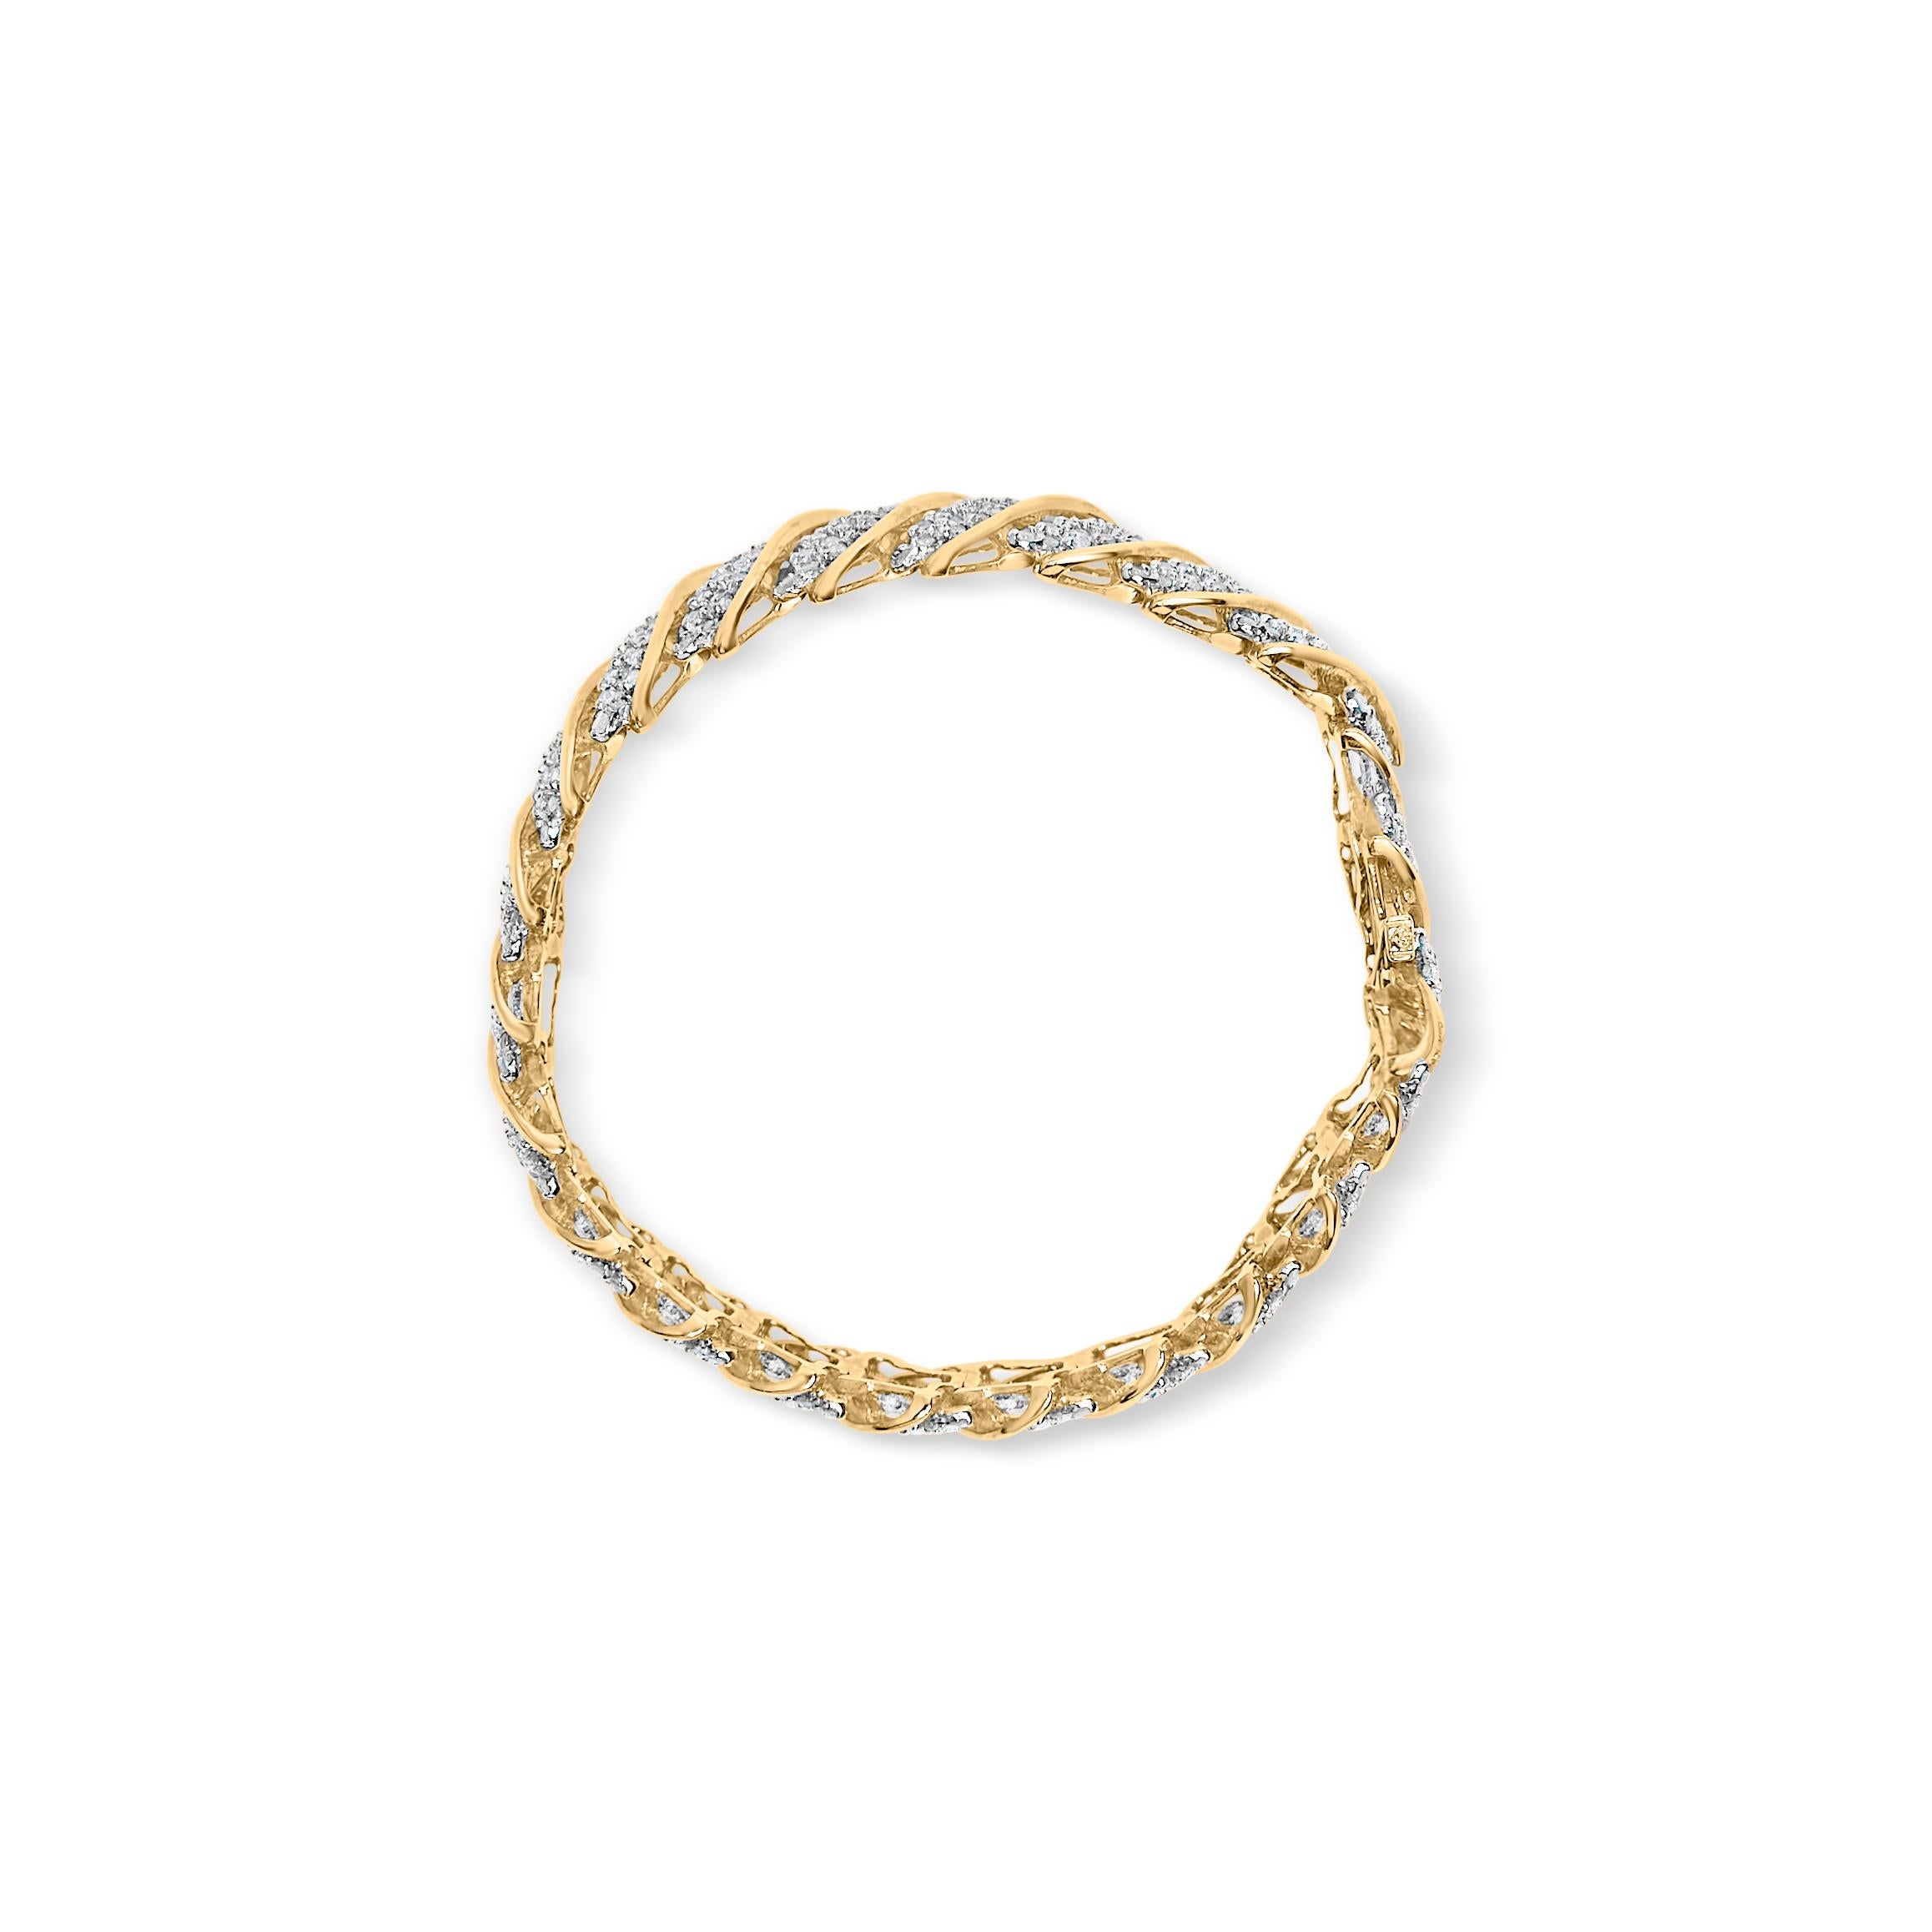 Contemporary 10K Yellow Gold 6.0 Carat Pave Diamond S-Link Wave Link Bracelet